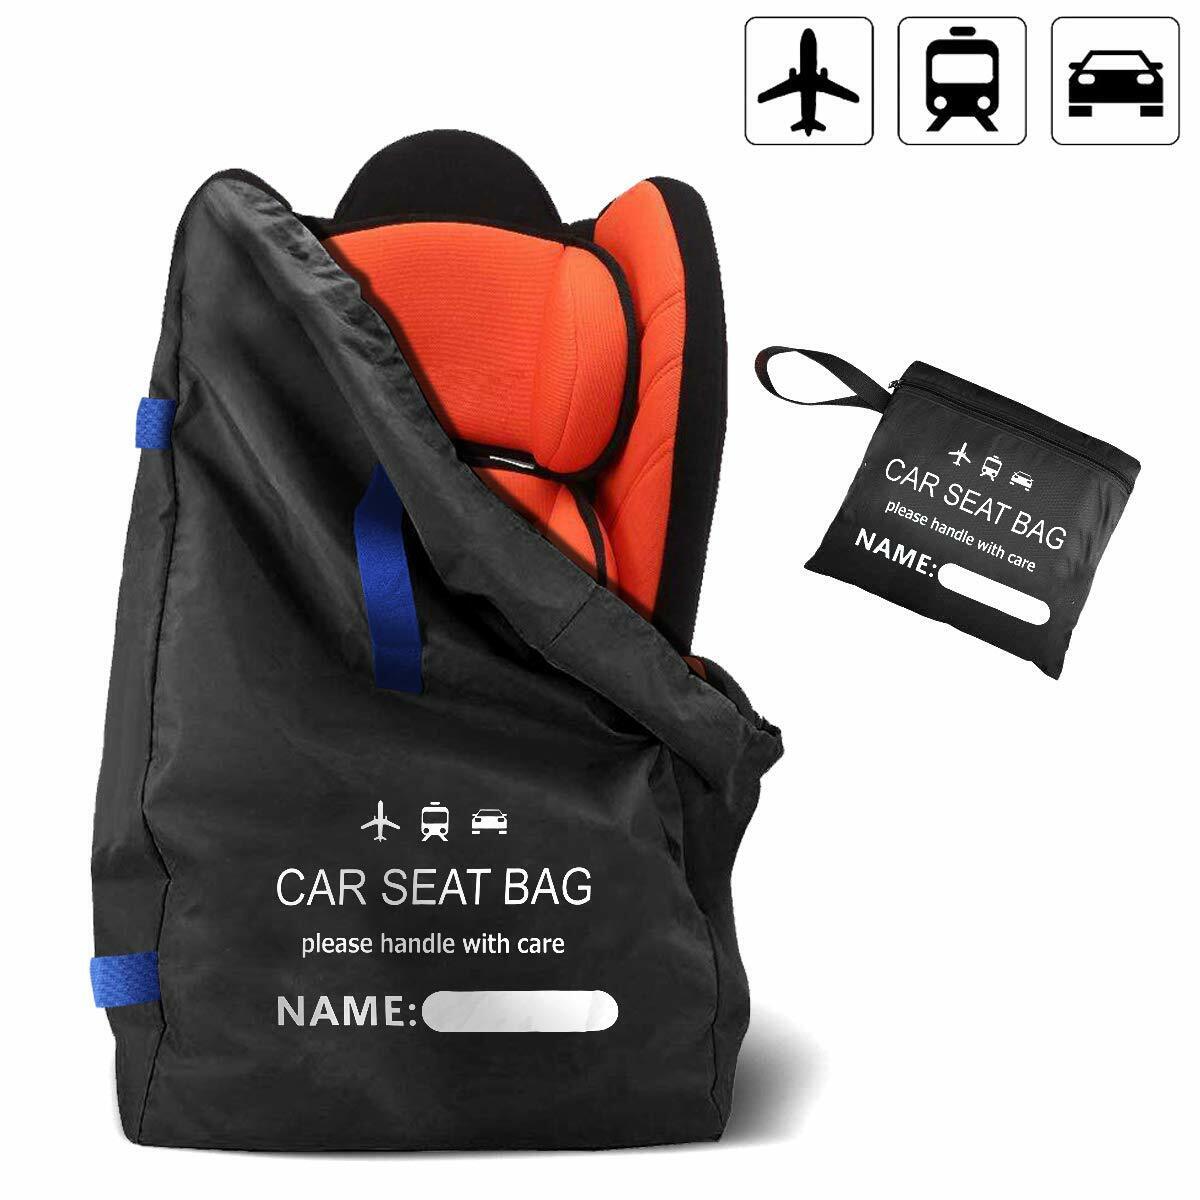 Car Baby Seat Travel Bag Stroller Bag for Airplane Gate Check Ba